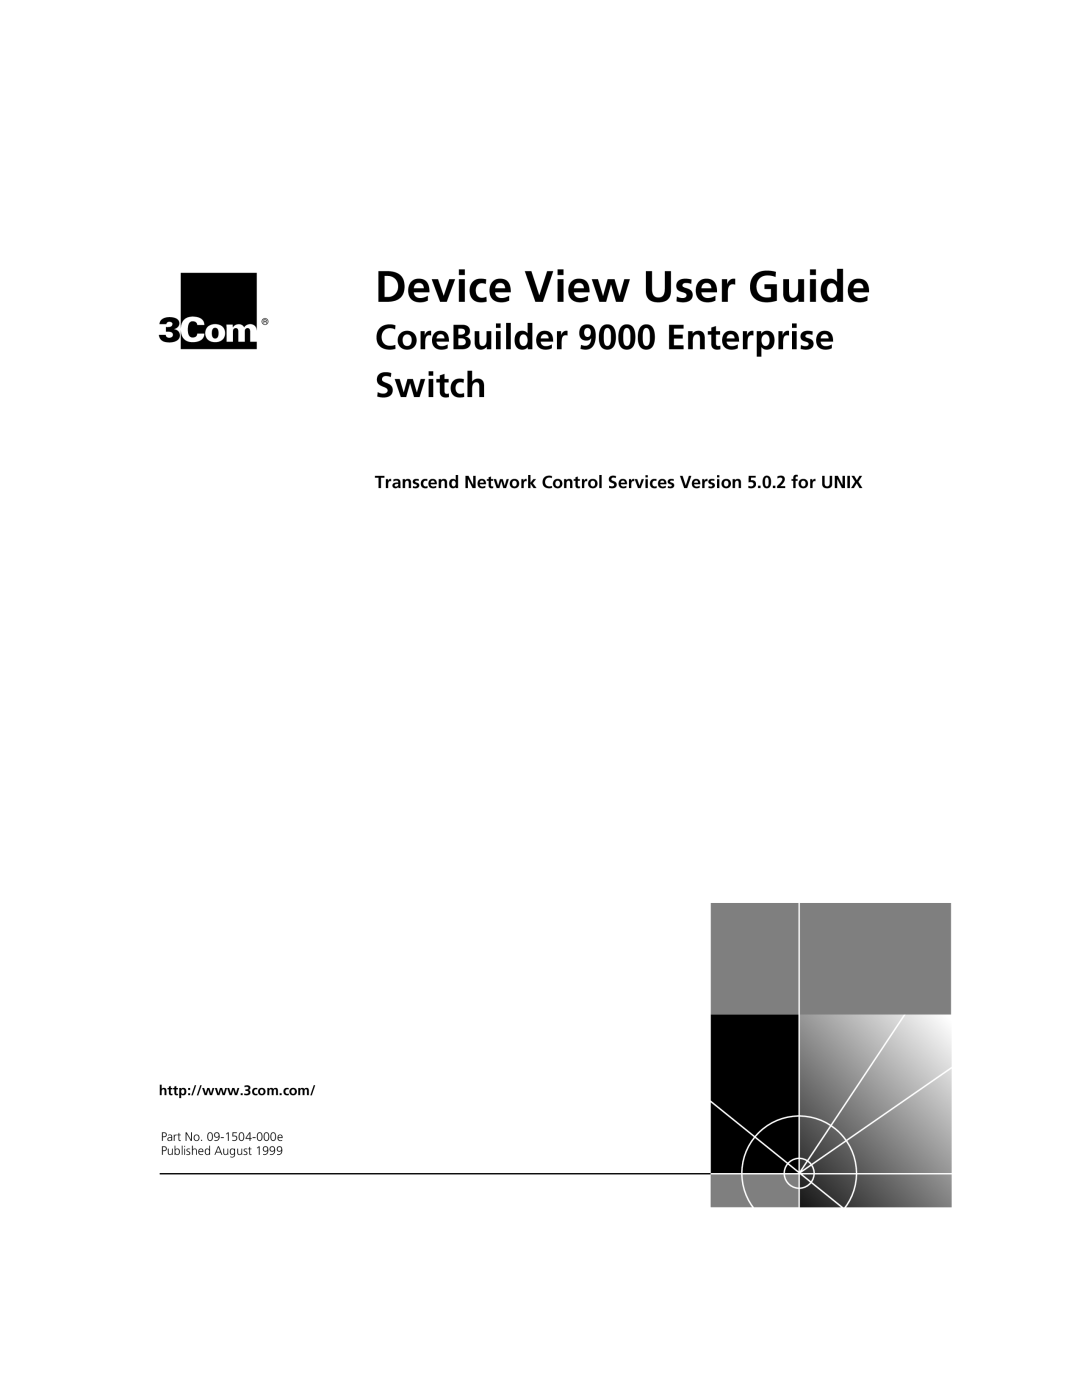 3Com manual Device View User Guide, CoreBuilder 9000 Enterprise Switch 